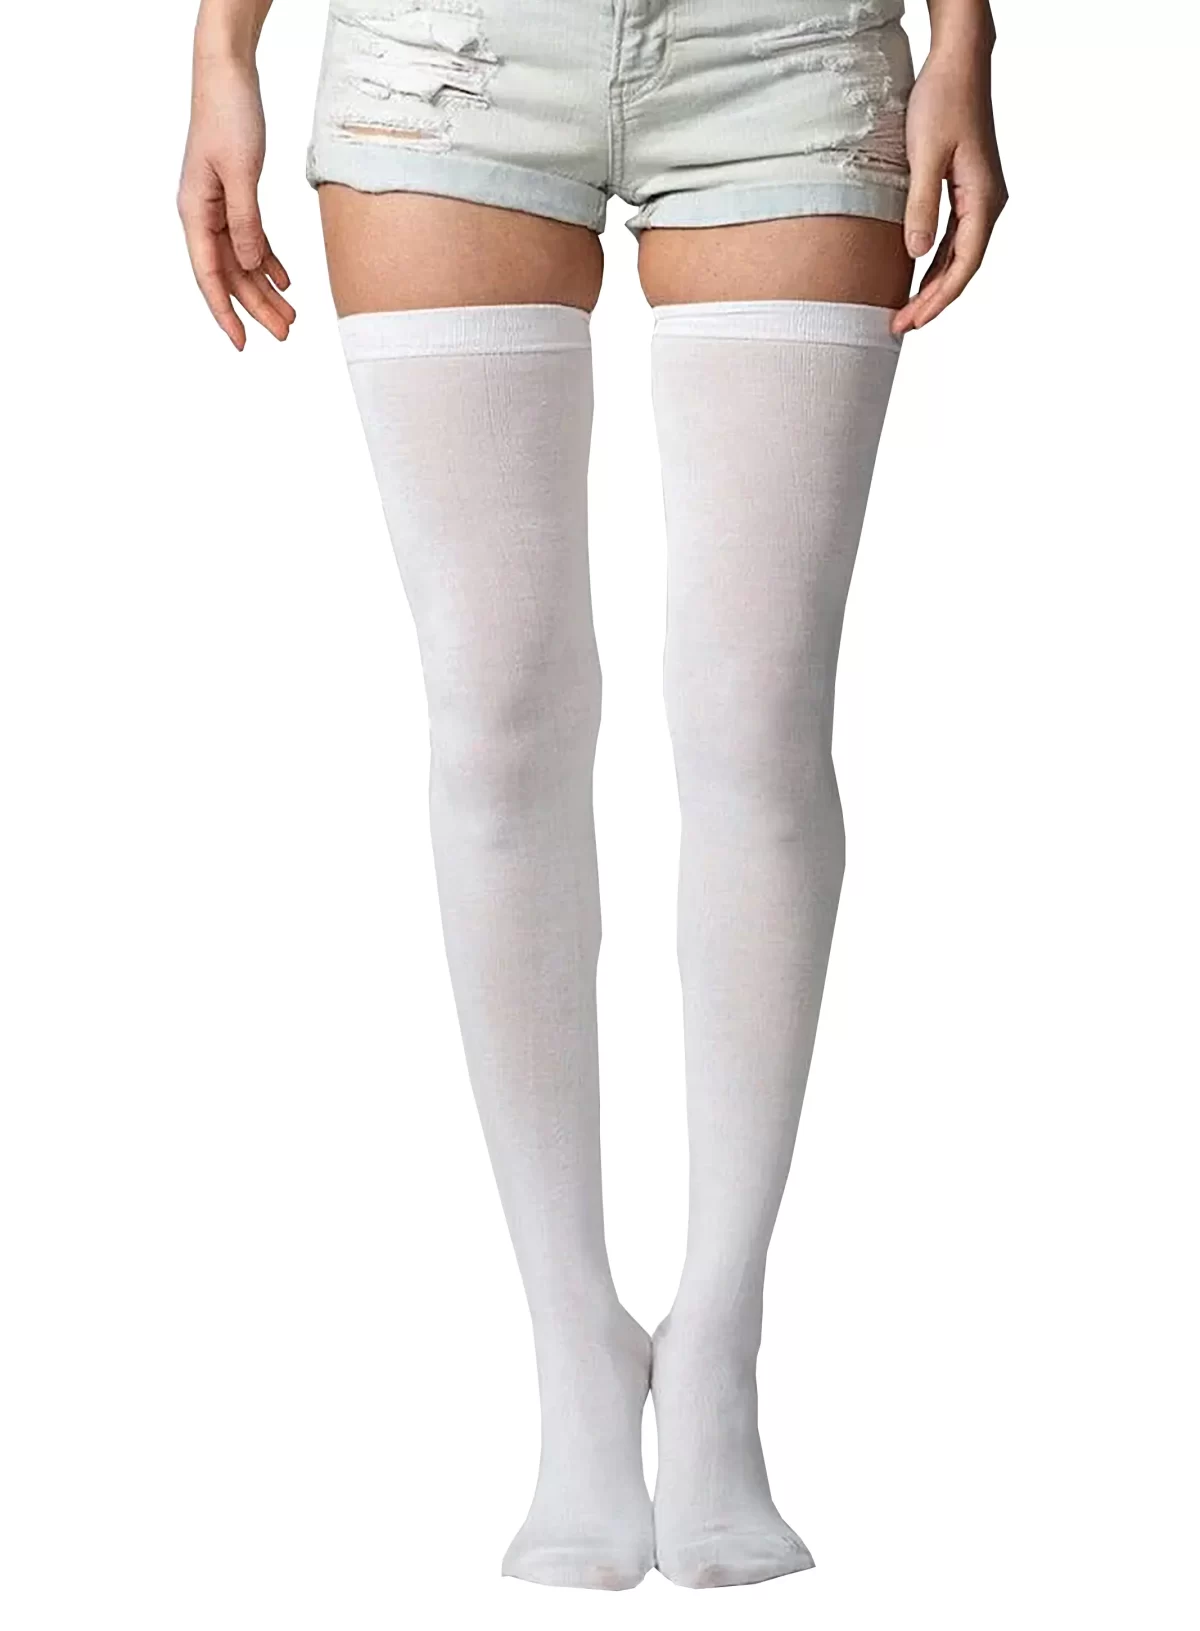 White Girls and Women's Thigh High Stocking/Socks ( Free Size )3